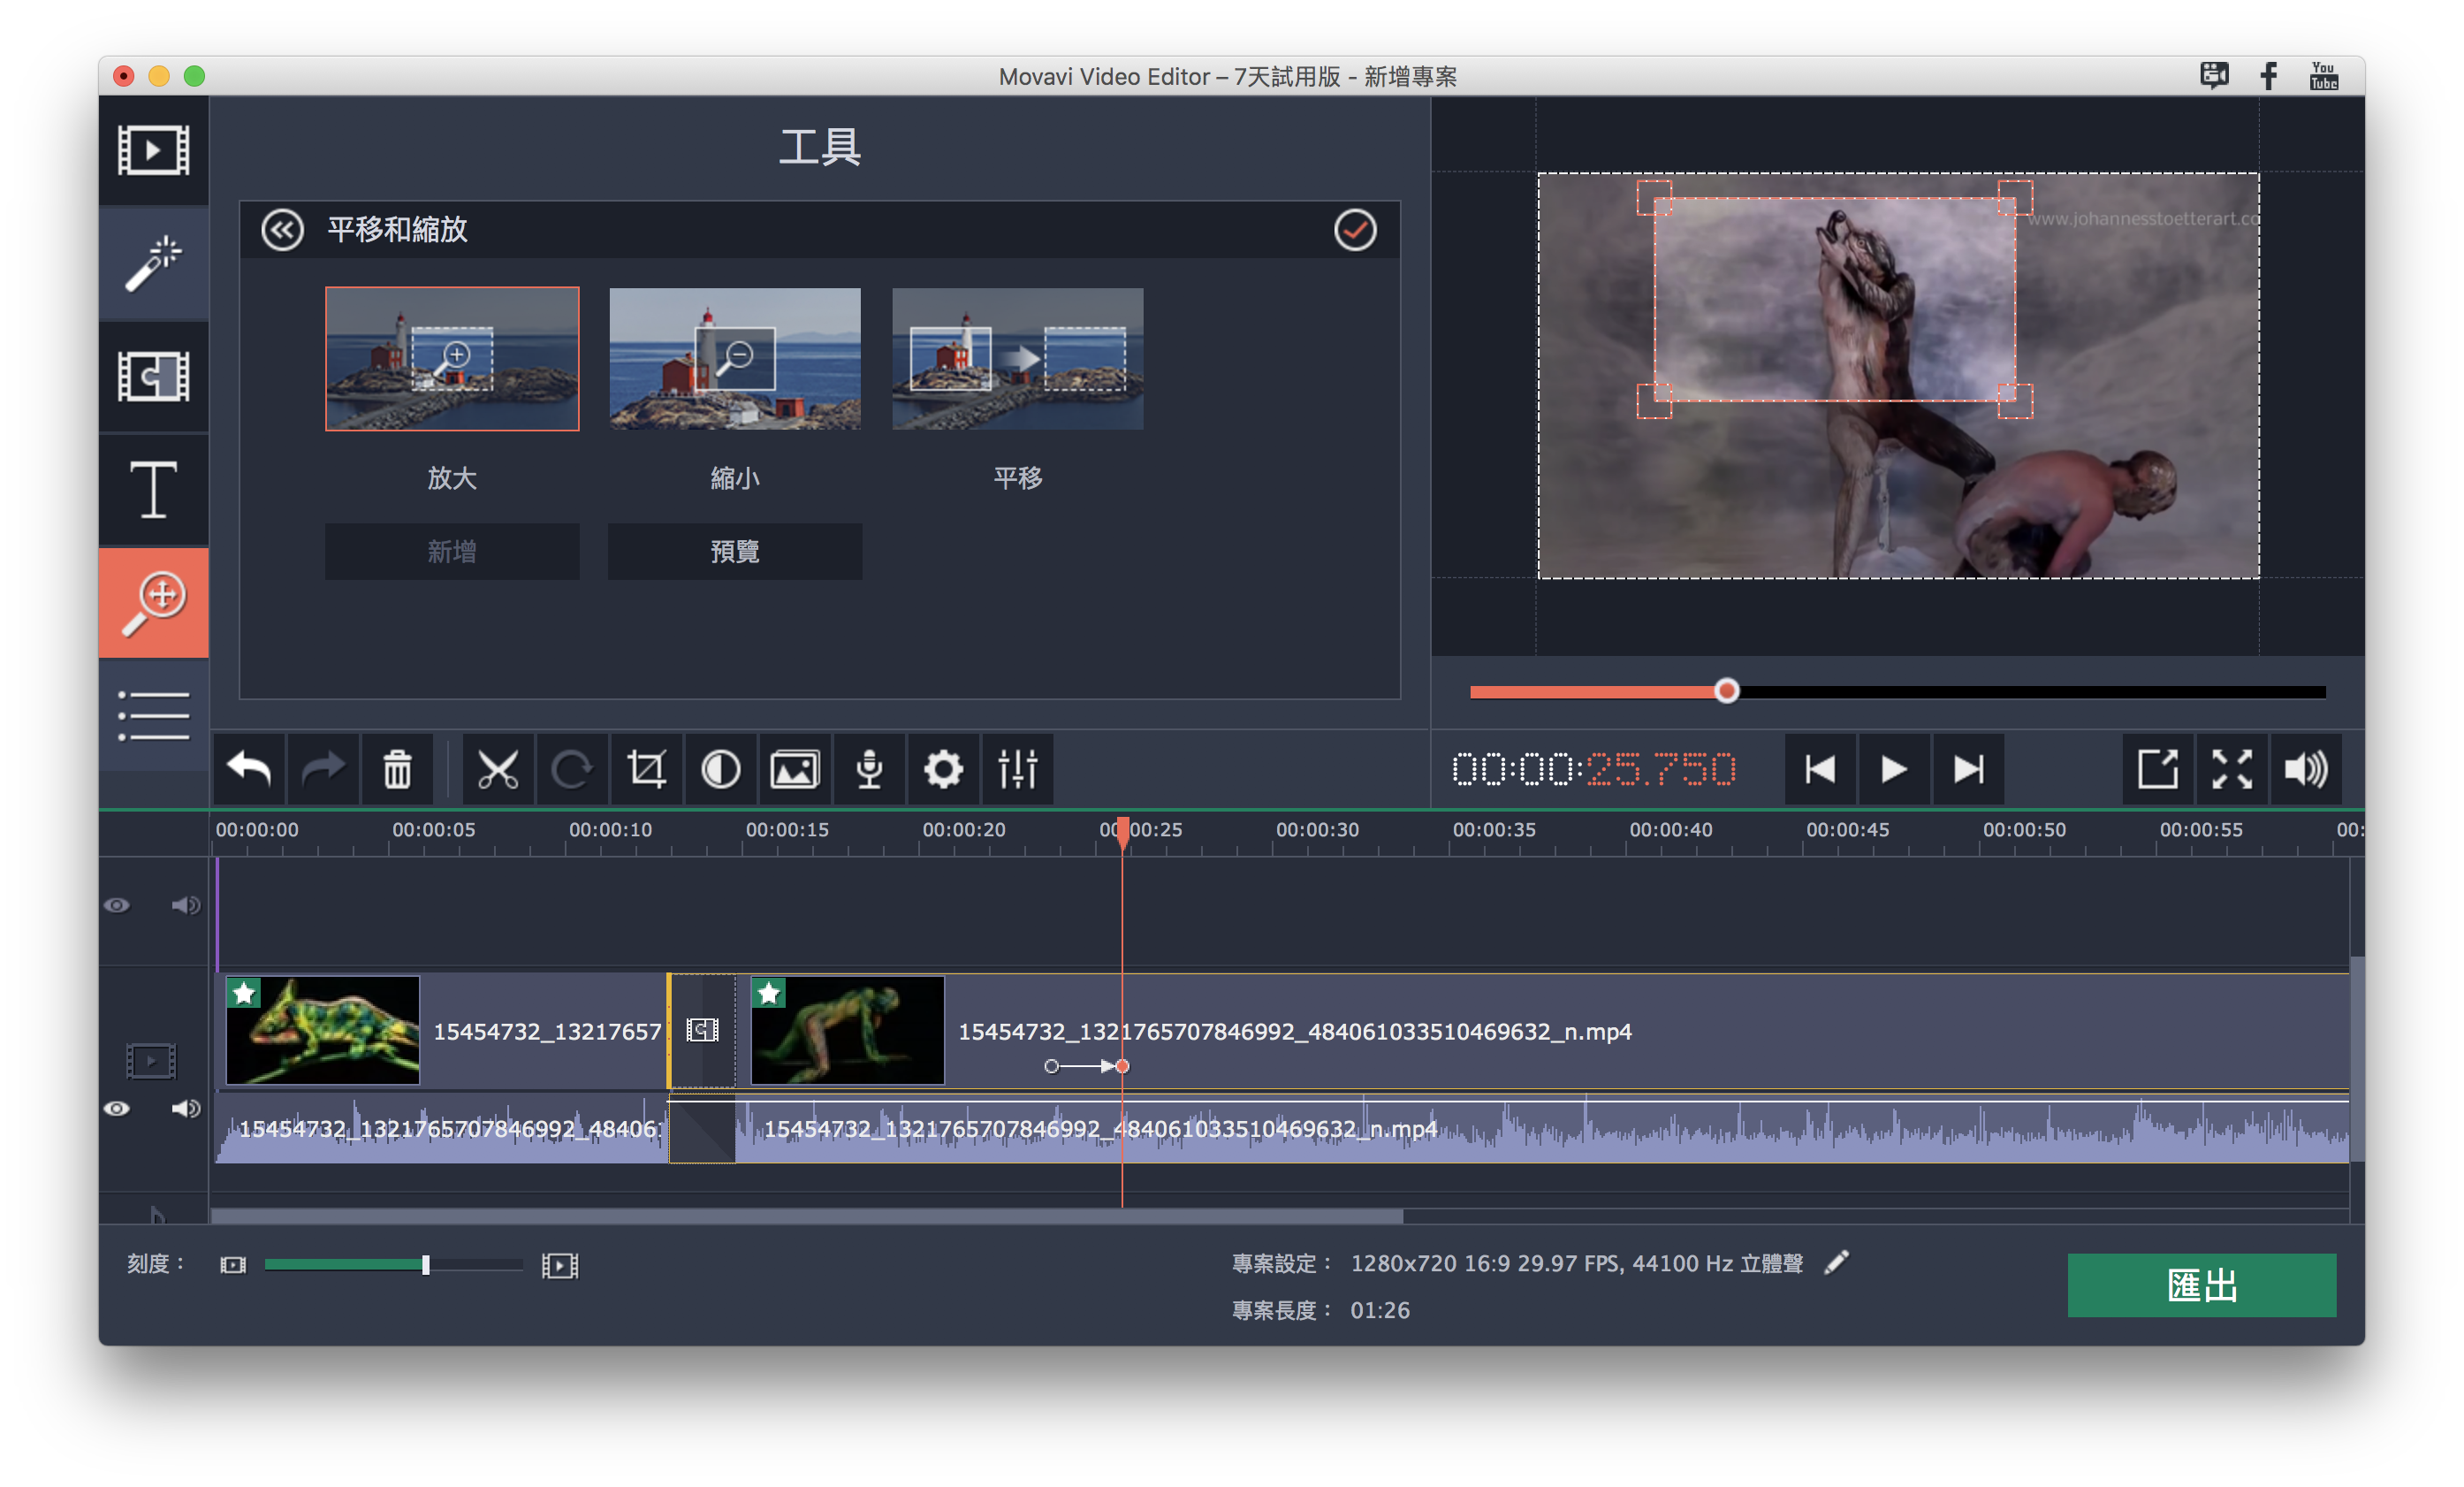 movavi video editor for mac free